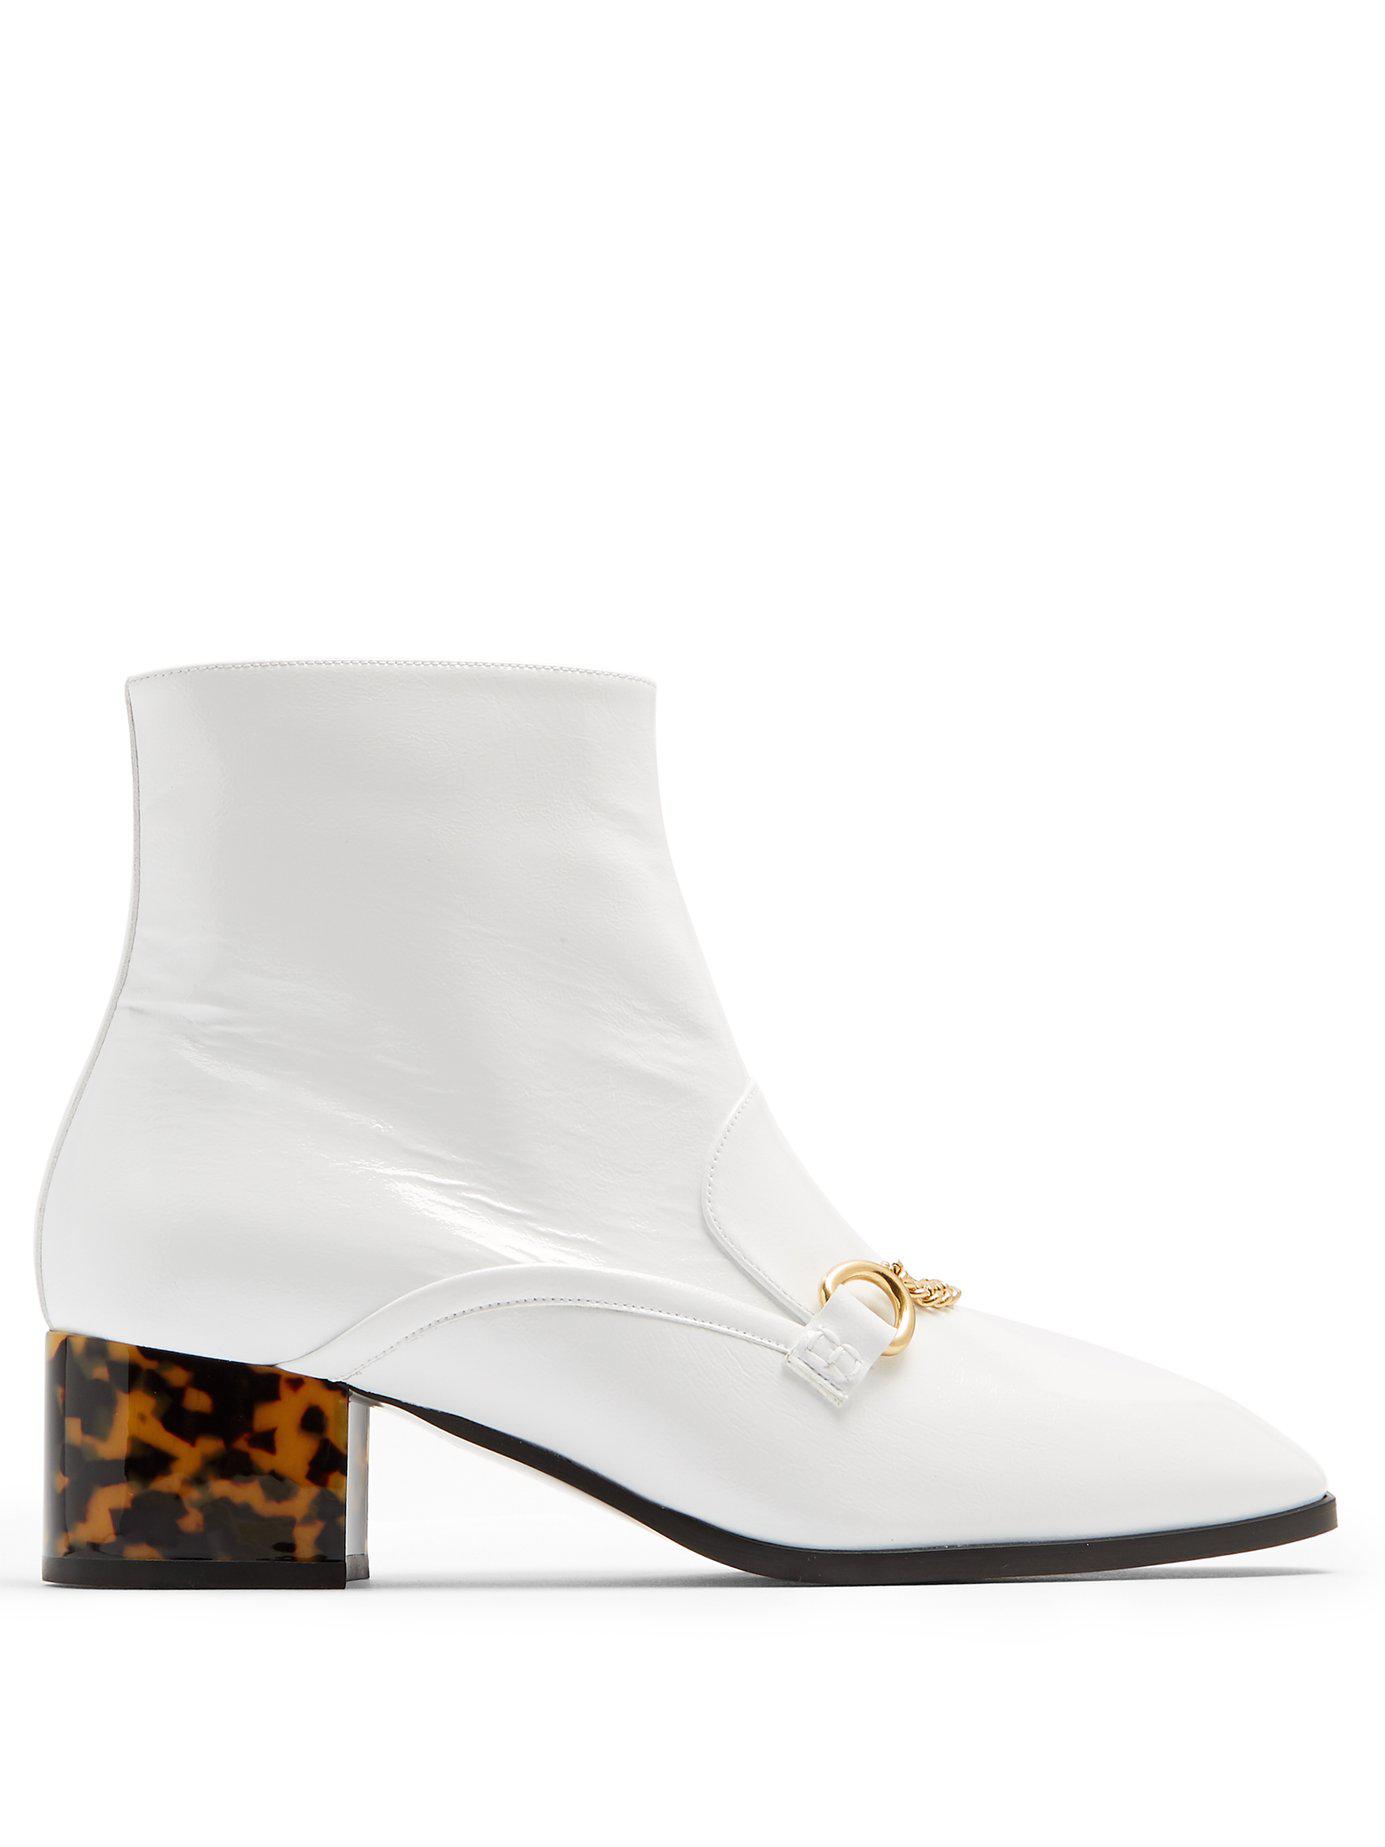 stella mccartney white boots